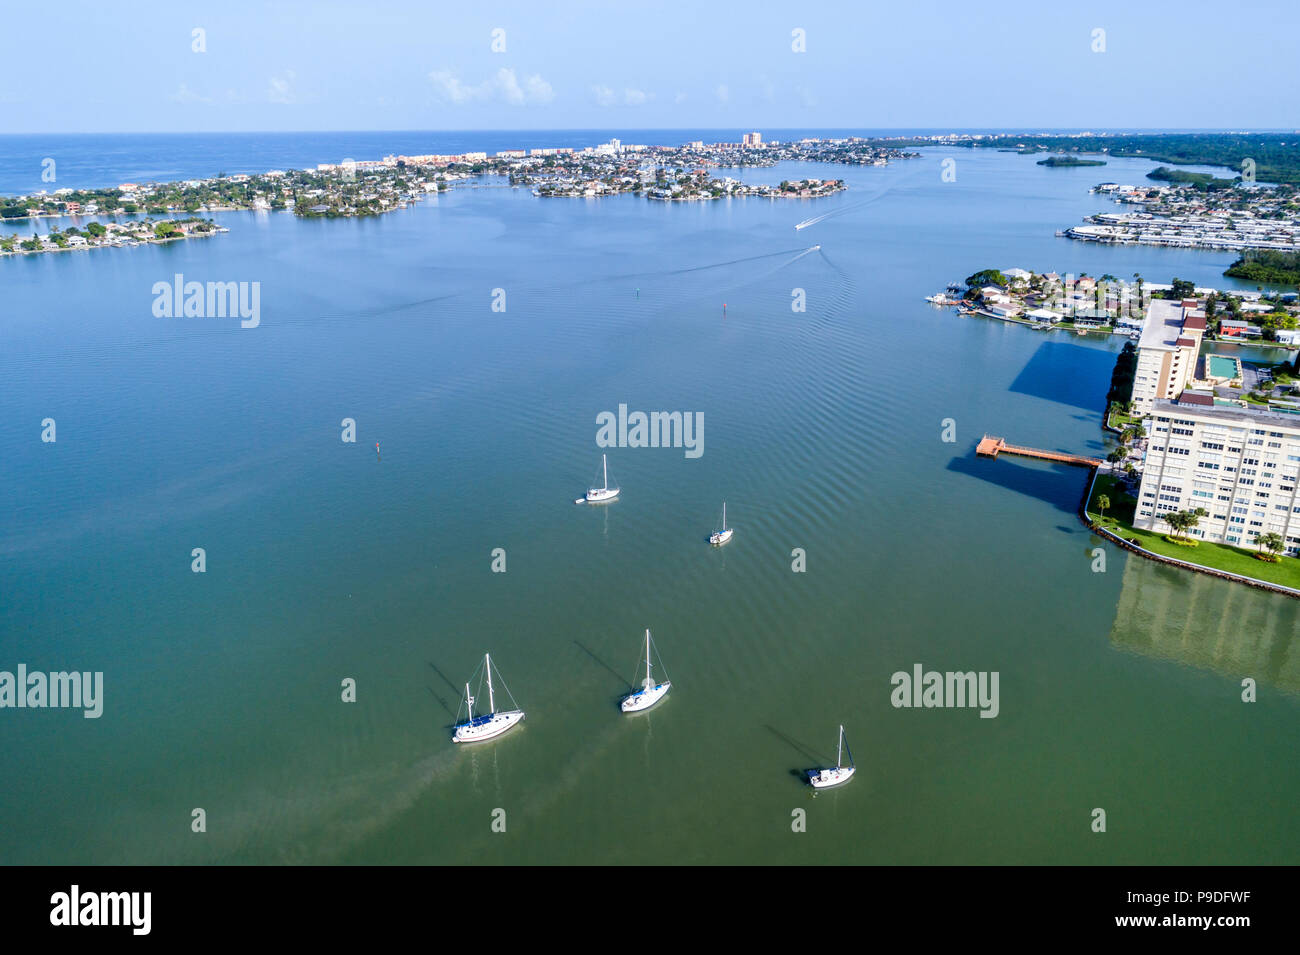 St. Saint Petersburg Florida,Madeira Beach,Boca Ciega Bay,Gulf of Mexico,boats,aerial overhead view,FL18071127d Stock Photo